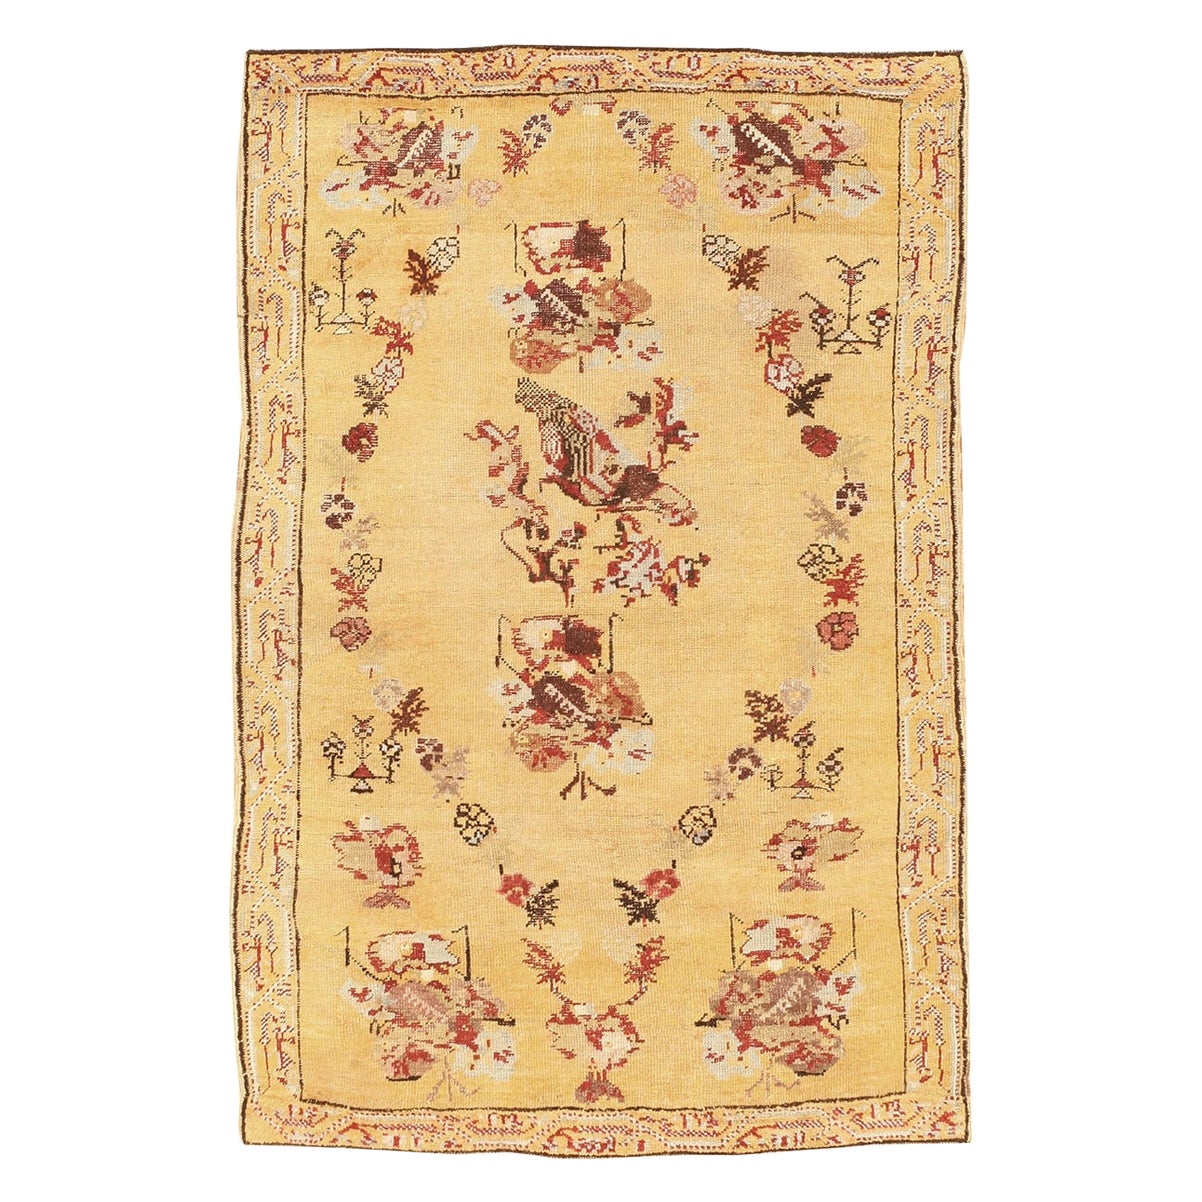 Antique Turkish Ghiordes Carpet. Size: 3 ft 4 in x 5 ft